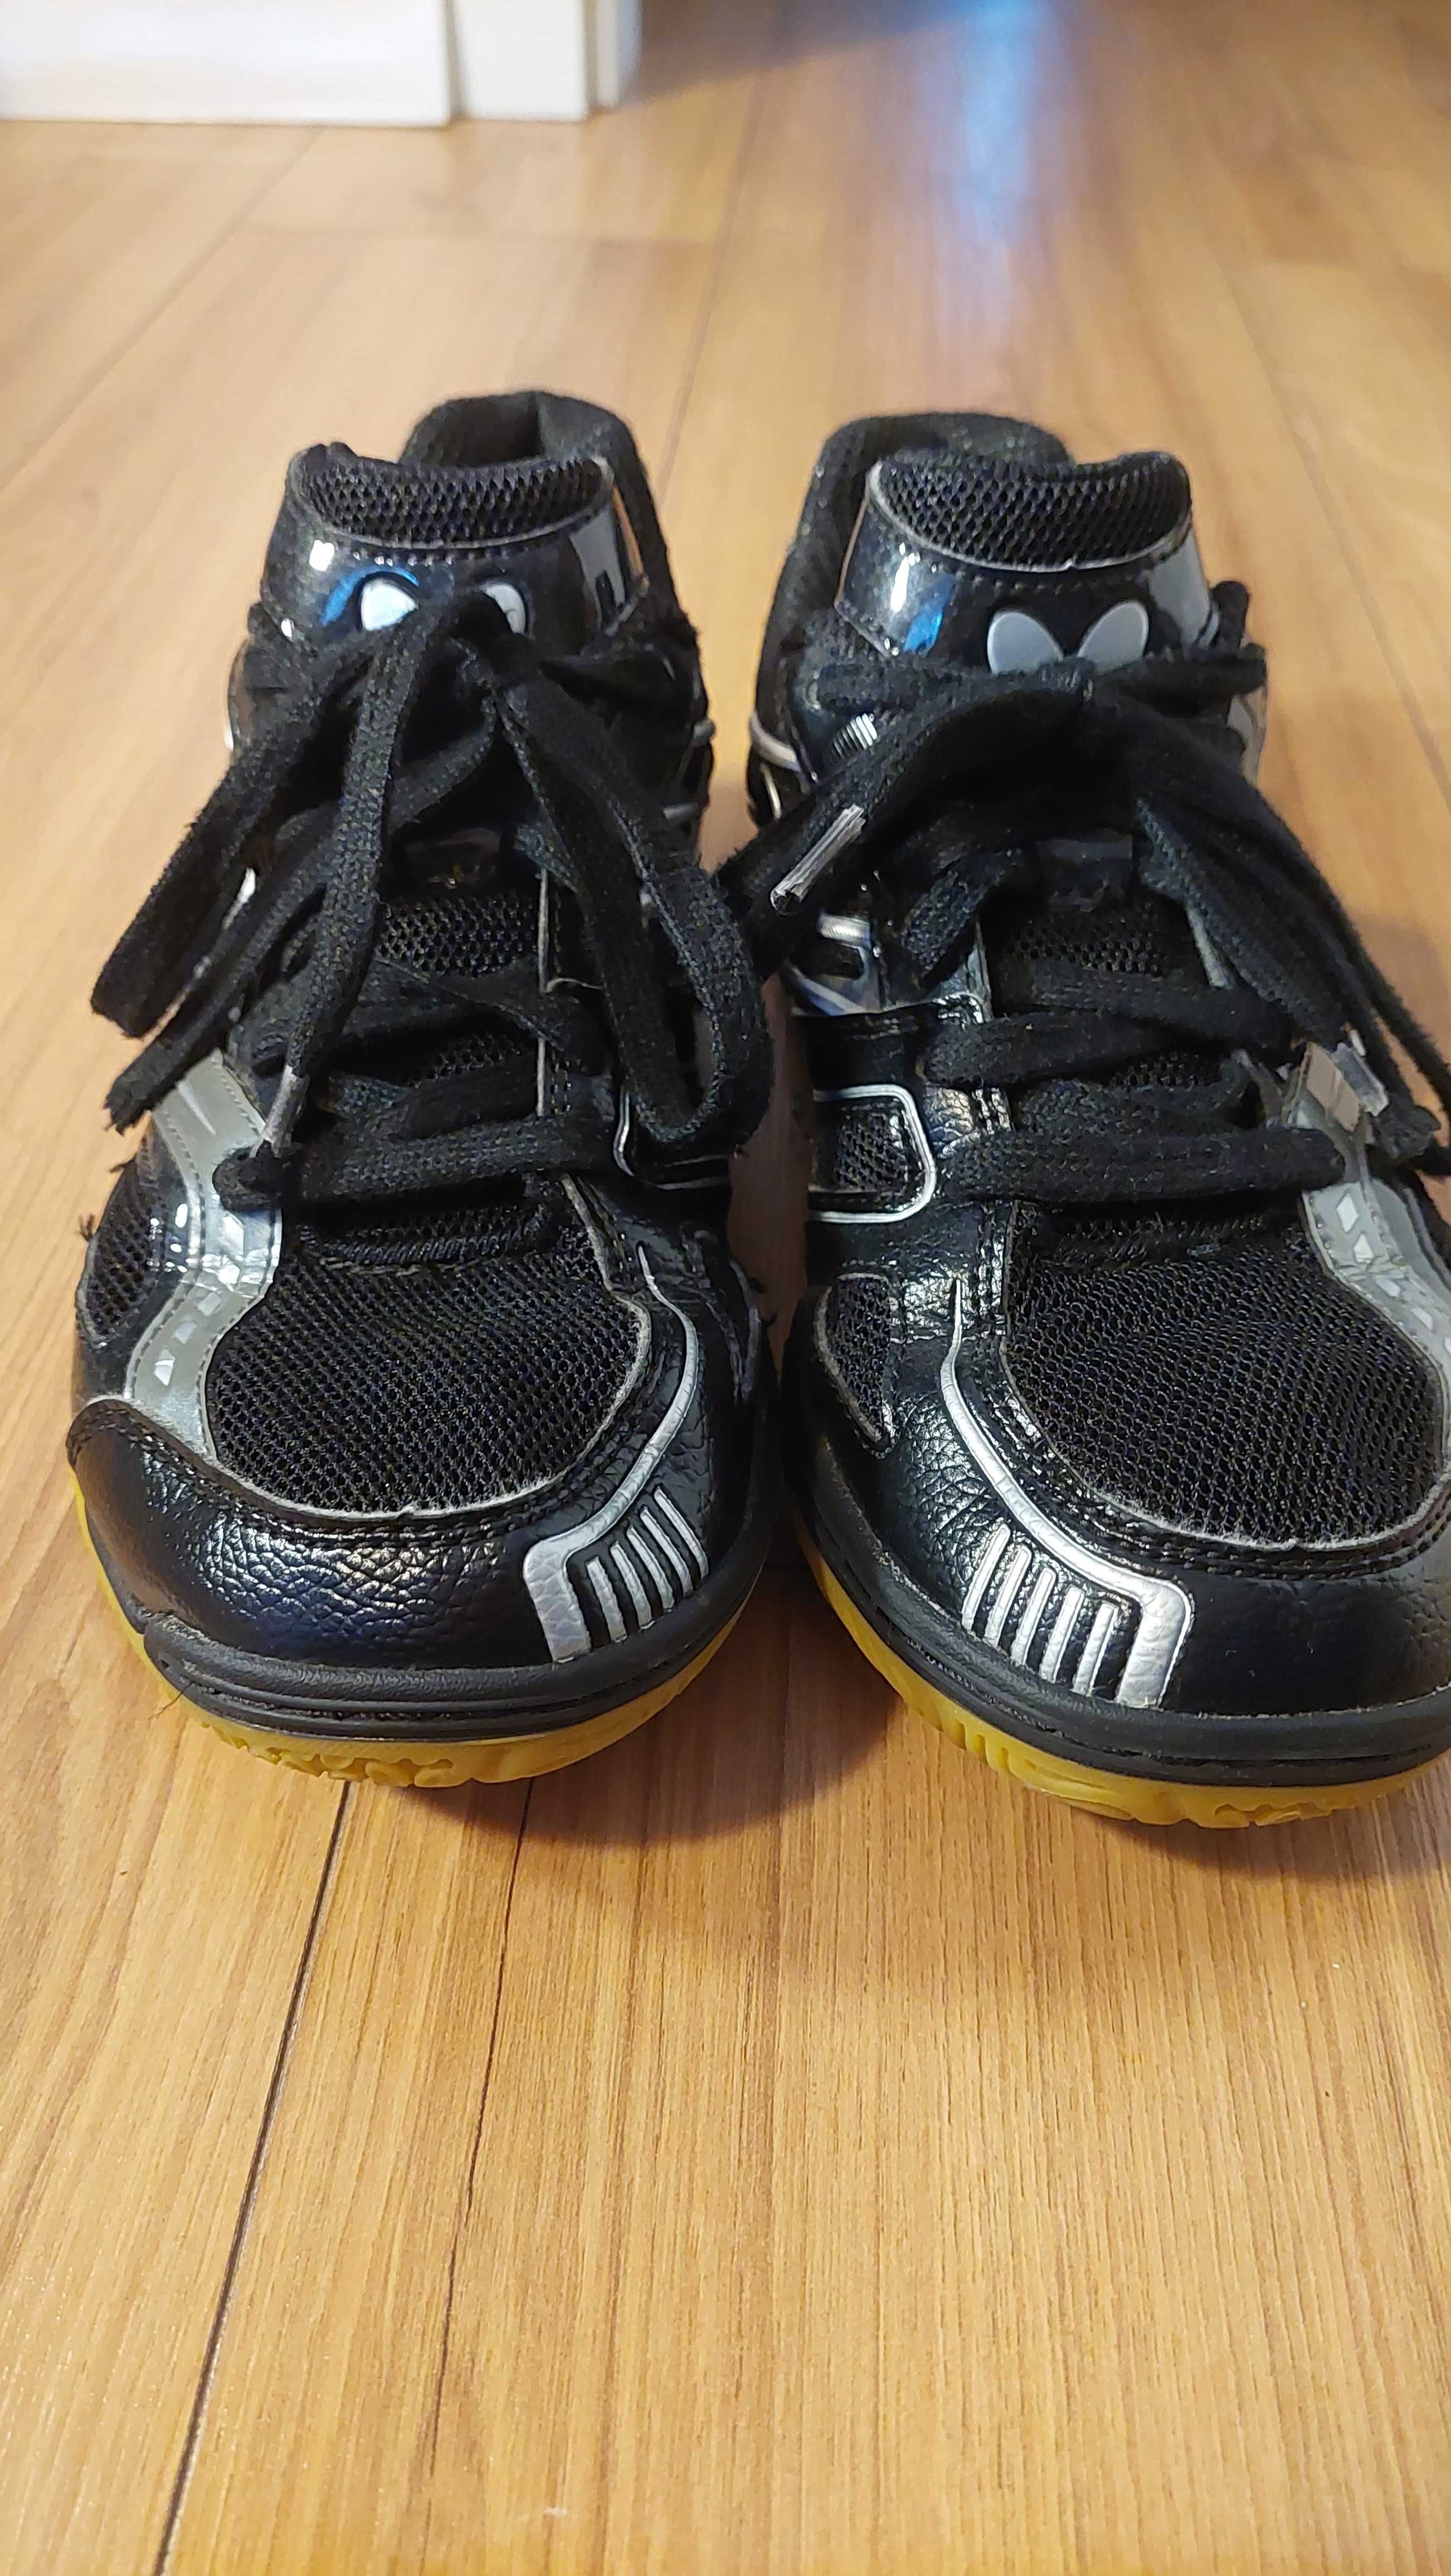 Pantofi sport tenis de masa Butterfly Lezoline Mach (EU 38 / 24.5 cm)